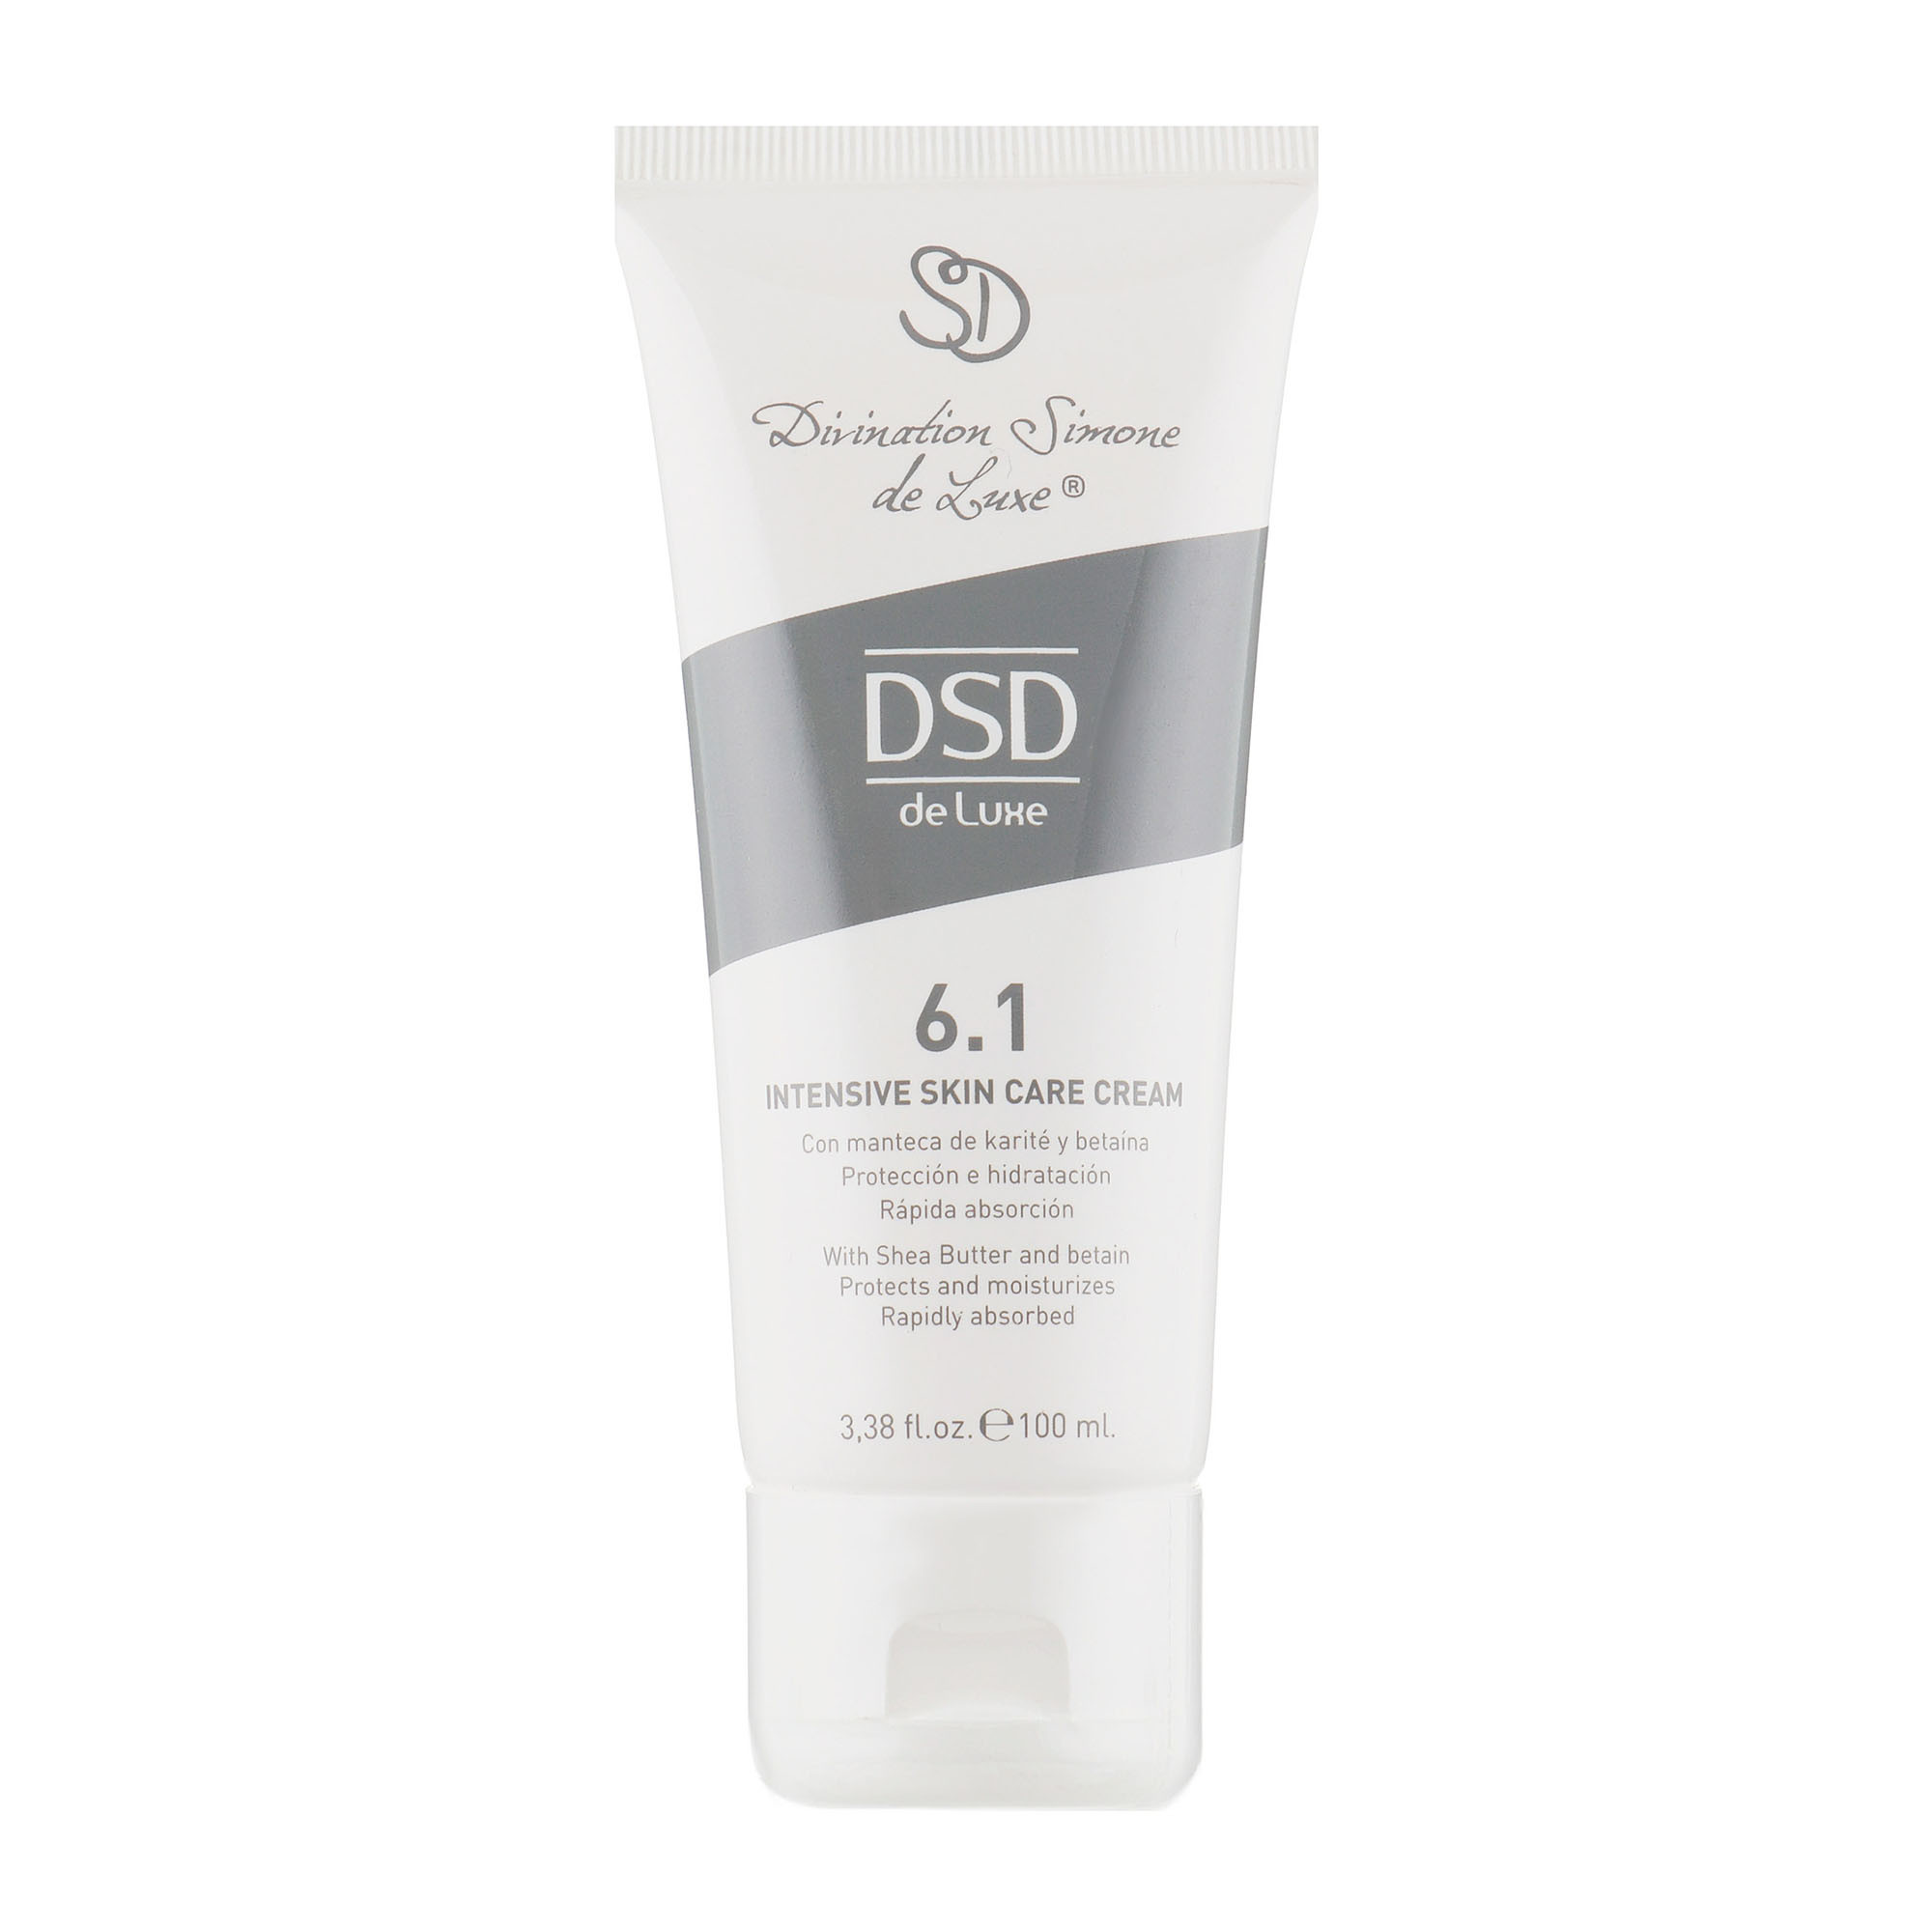 DSD de Luxe 6.1 Крем для интенсивного ухода за кожей